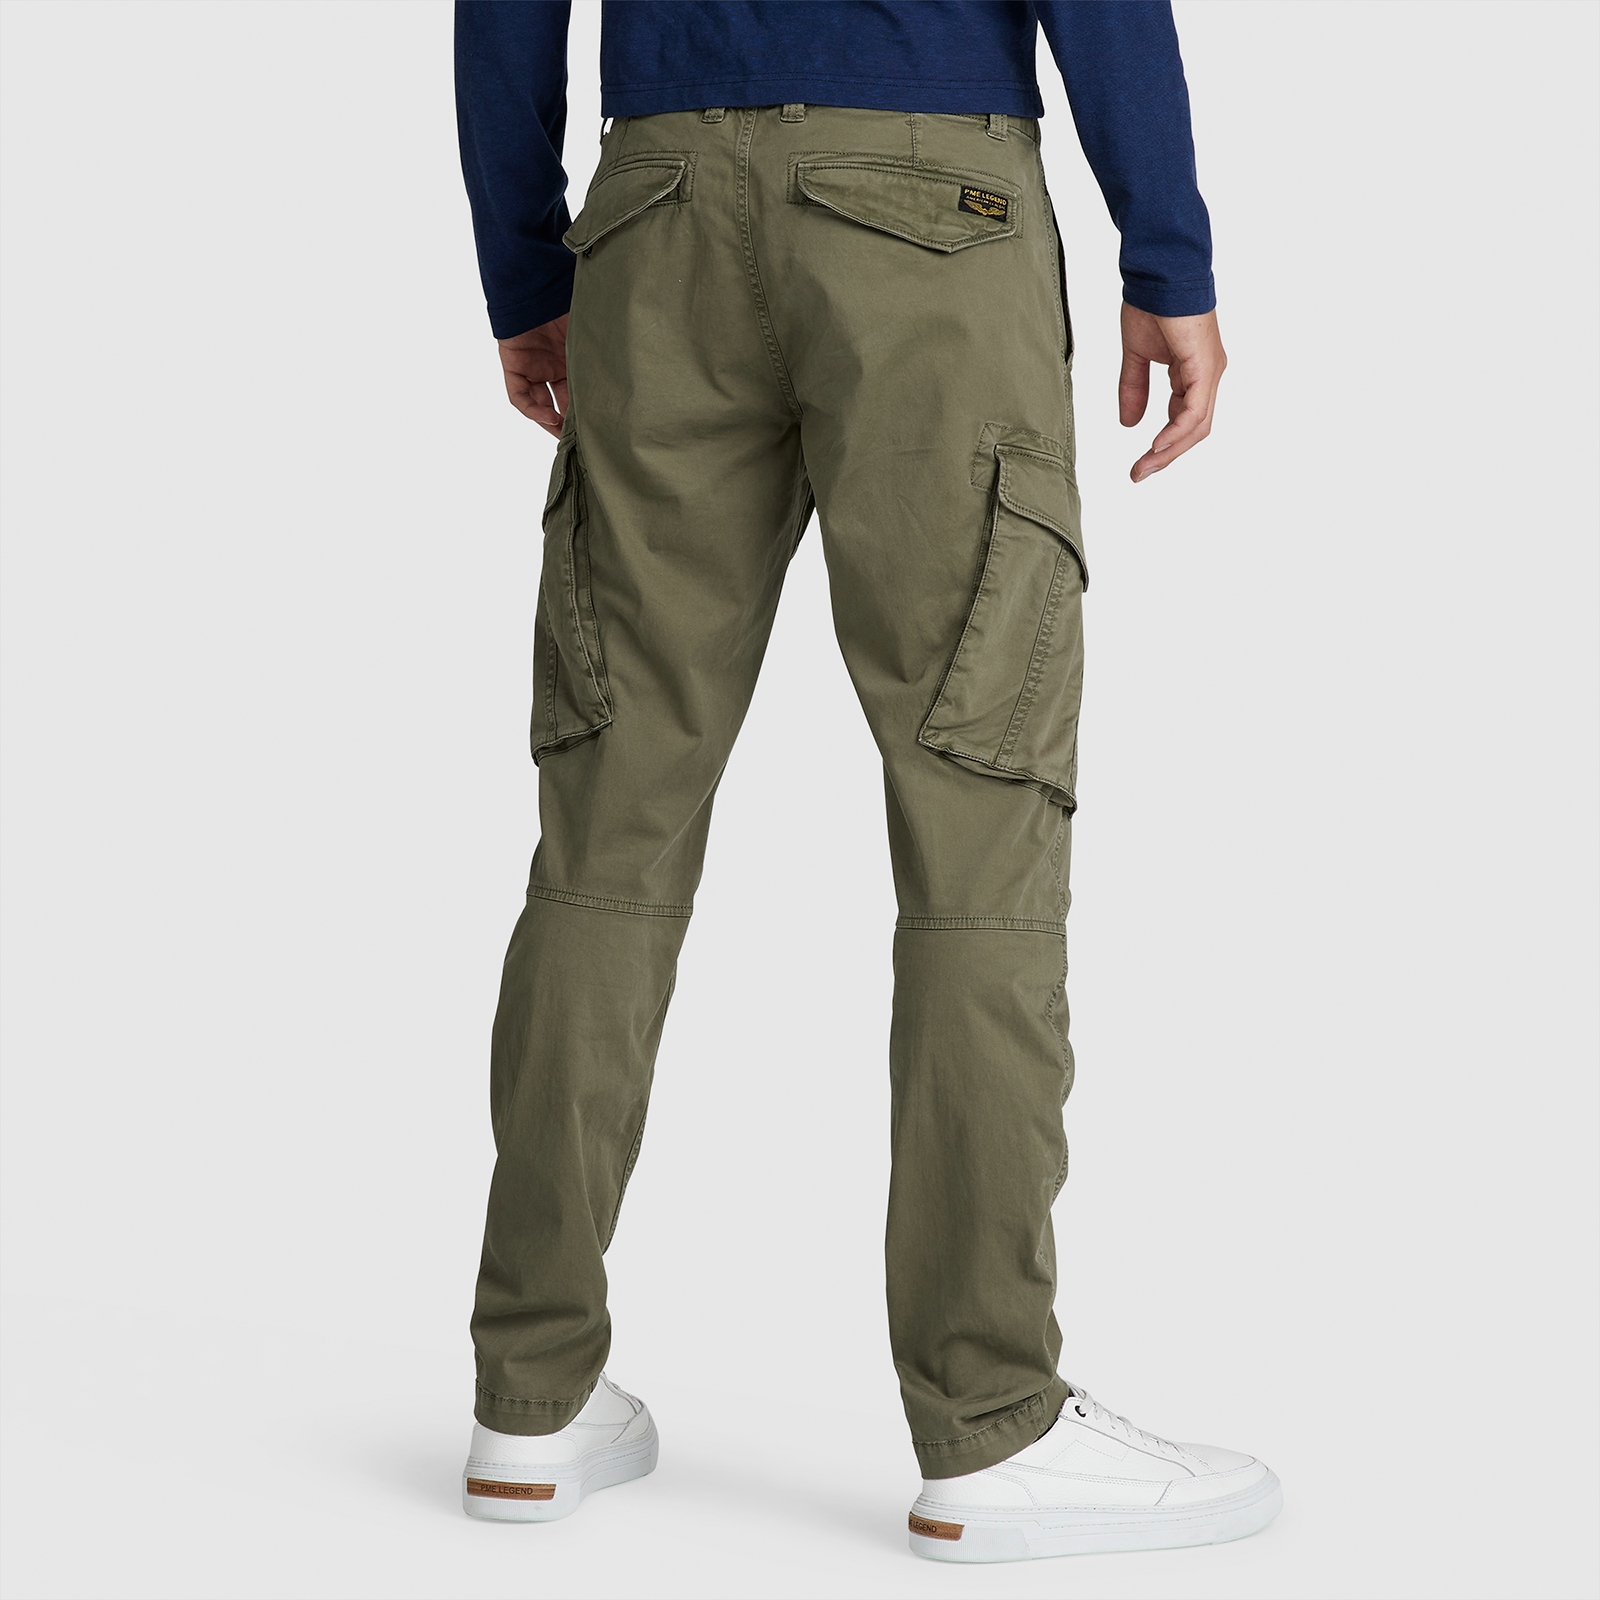 Jeans-Manufaktur PME STRETCH | Männer Stretch moss LEGEND Jeans Legend Jeans TWILL CARGO PTR2202640-6149 | | | green Twill Cargo | PME -